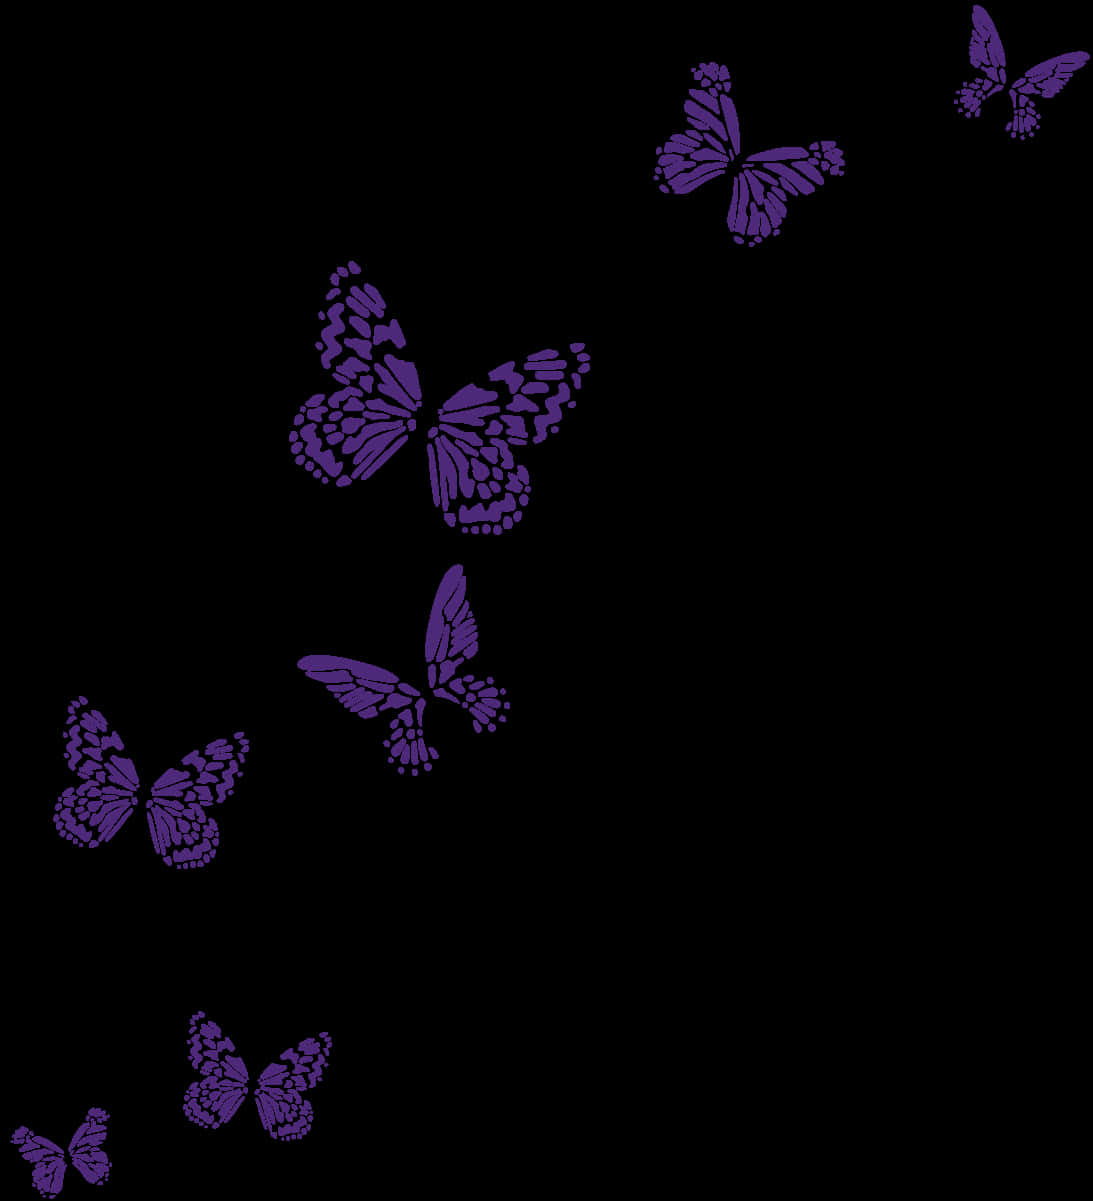 Violet And Black Mariposas